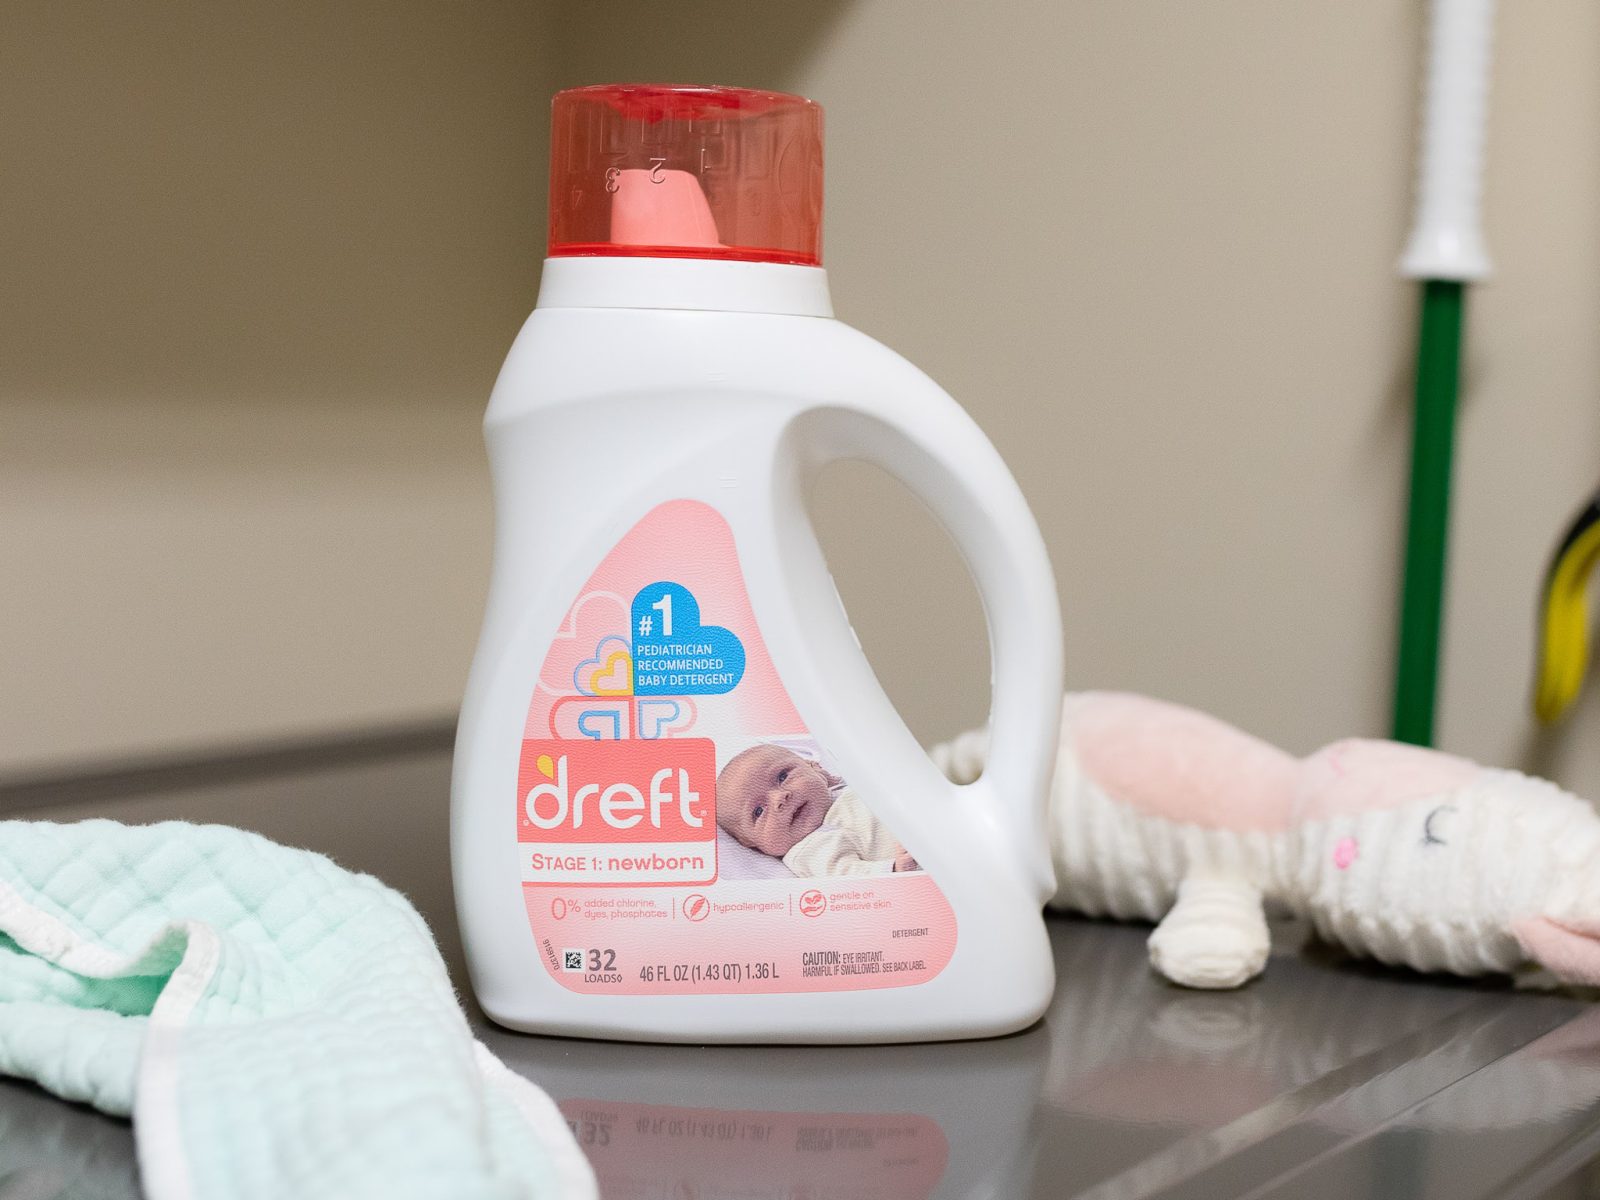 Dreft Laundry Detergent As Low As $5.99 At Kroger (Regular Price $12.39)